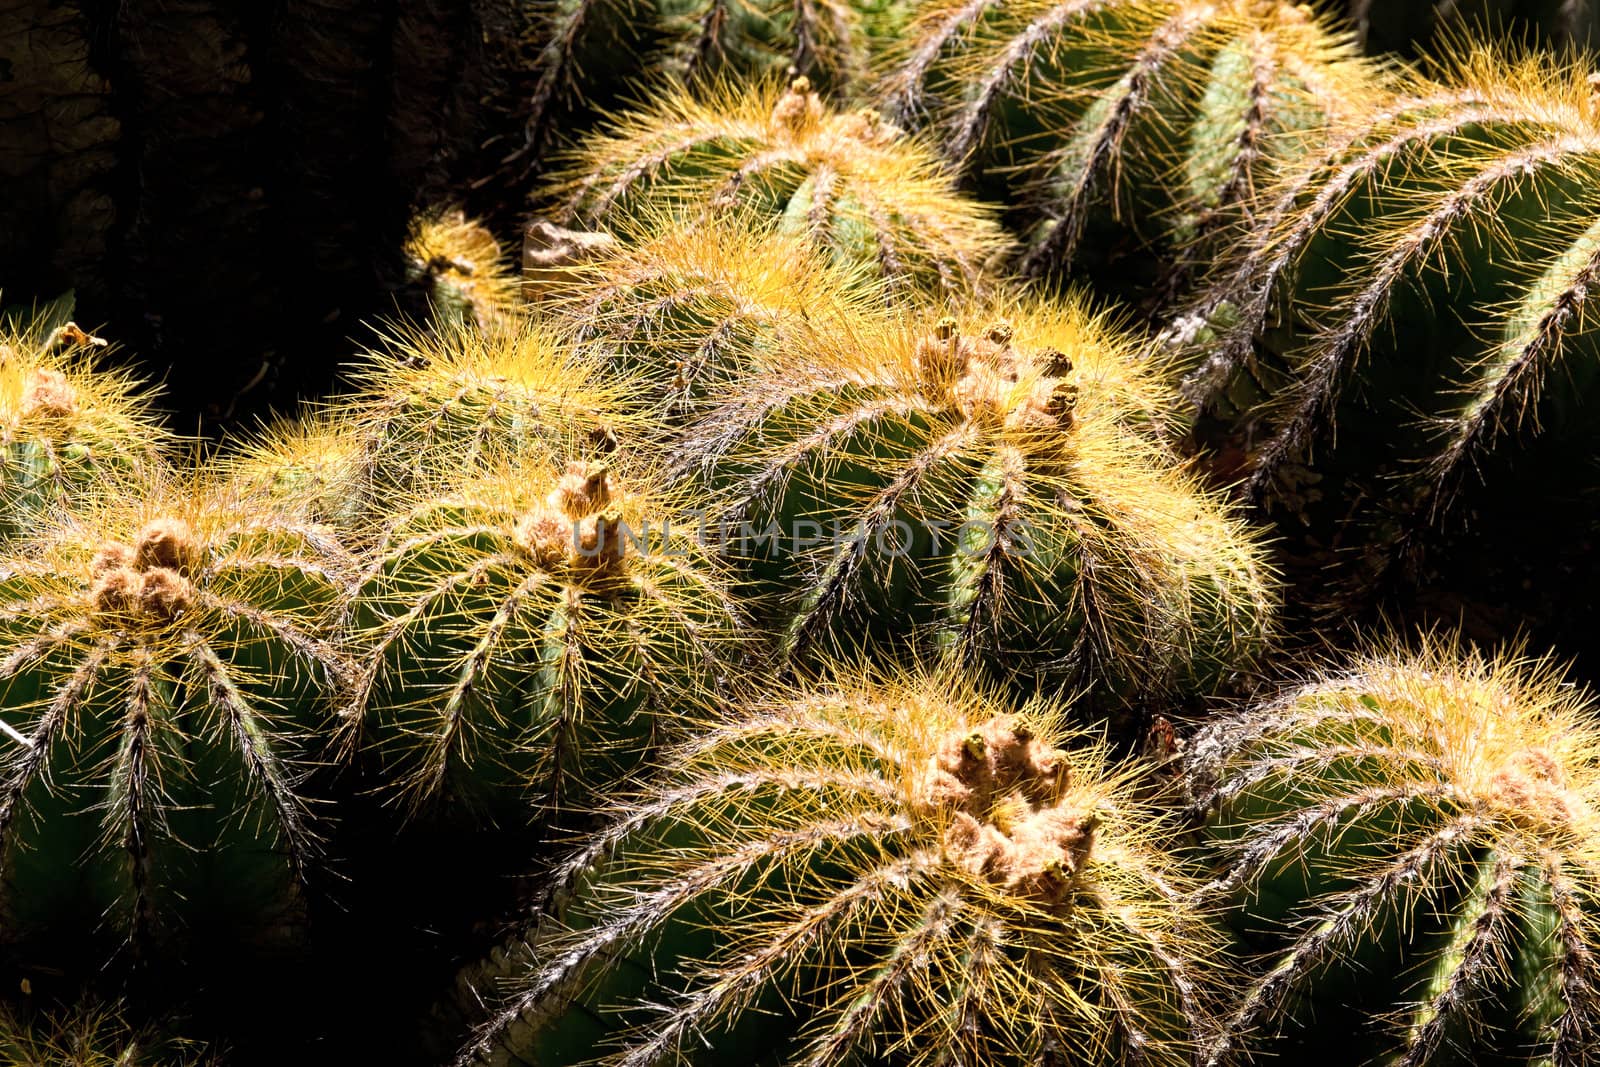 Golden Barrel Cactus by wolterk